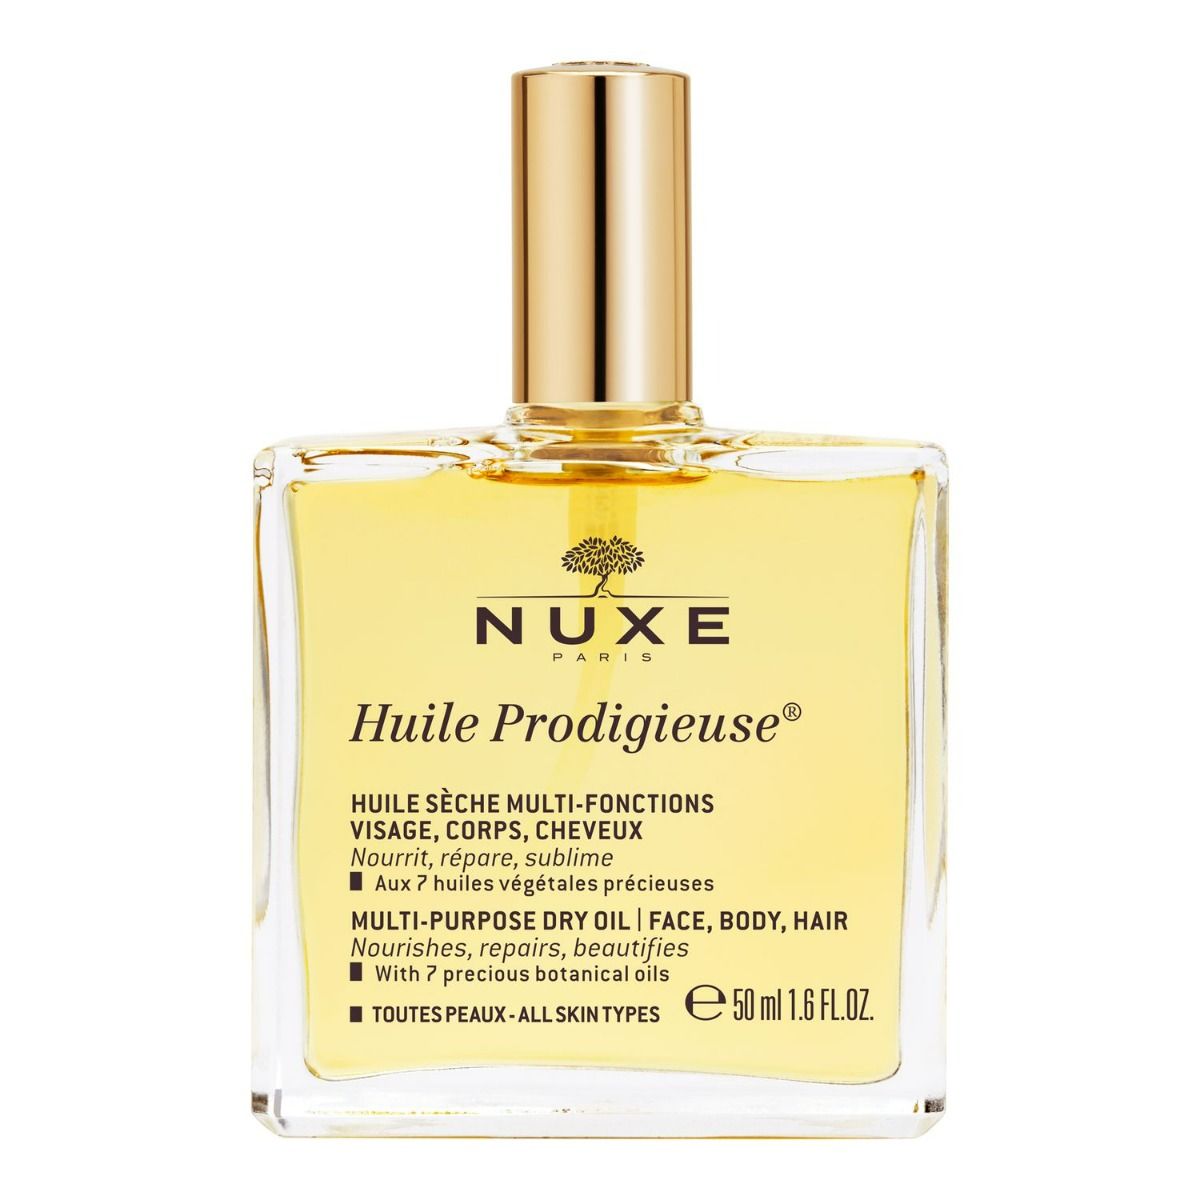 Nuxe Huile Prodigieuse масло для лица, тела и волос, 50 ml nuxe цветочное сухое масло huile prodigieuse florale 50 мл nuxe prodigieuse